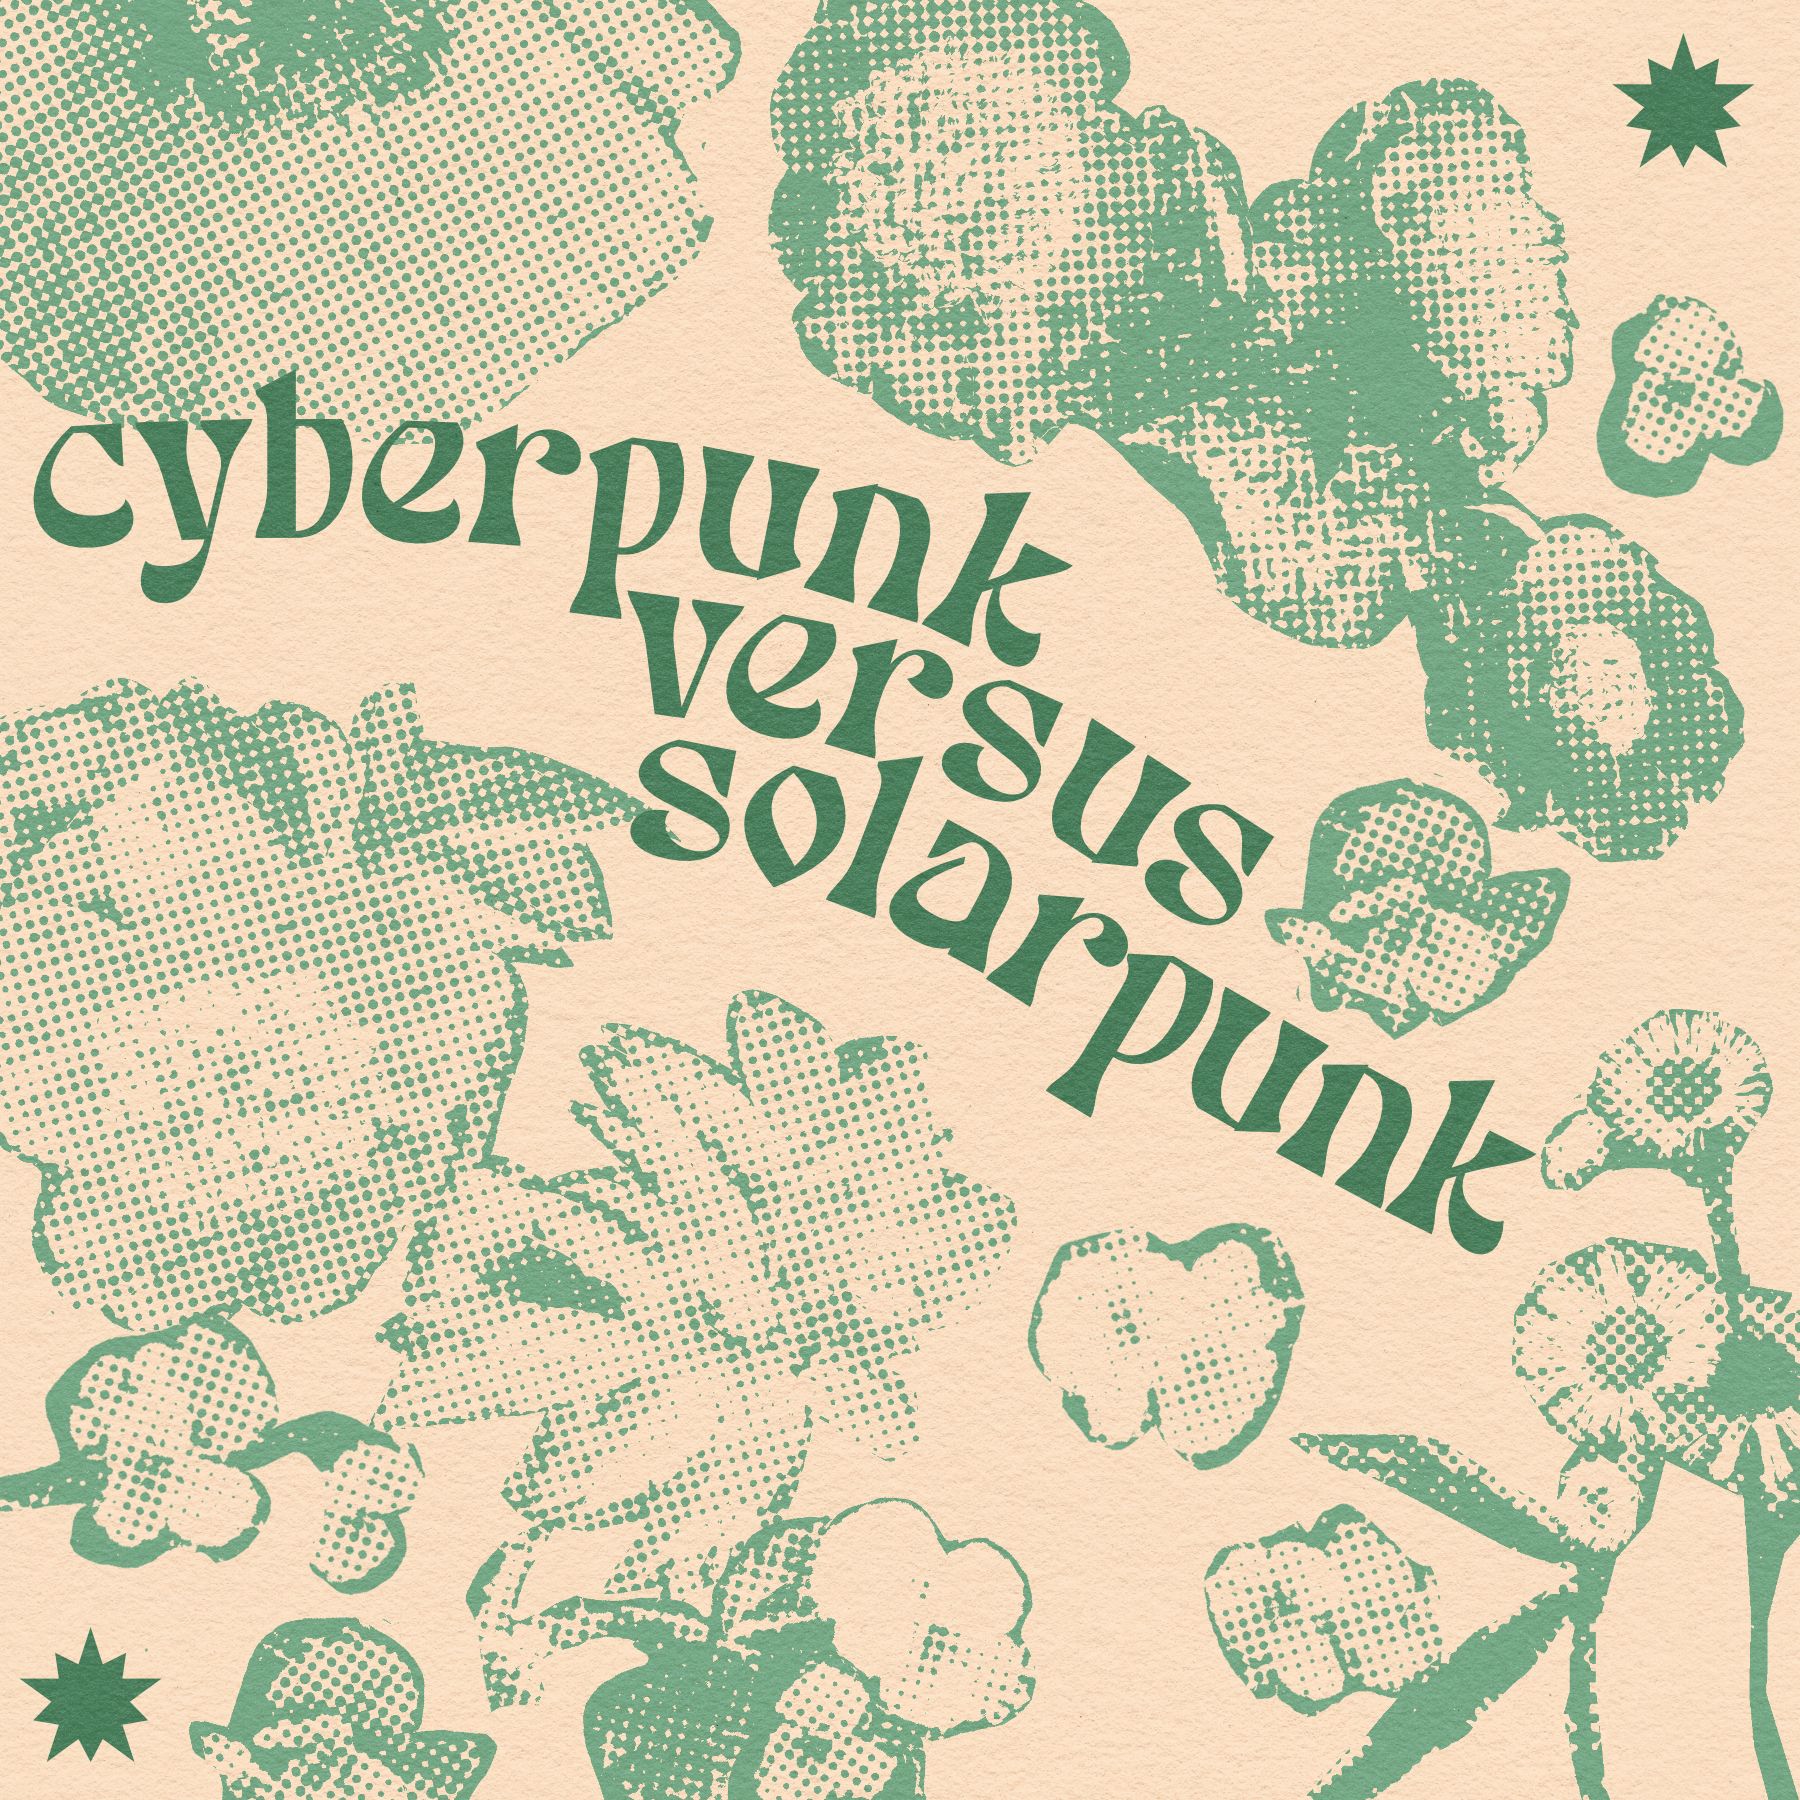 halftone flower collage with the words "cyberpunk versus solarpunk"